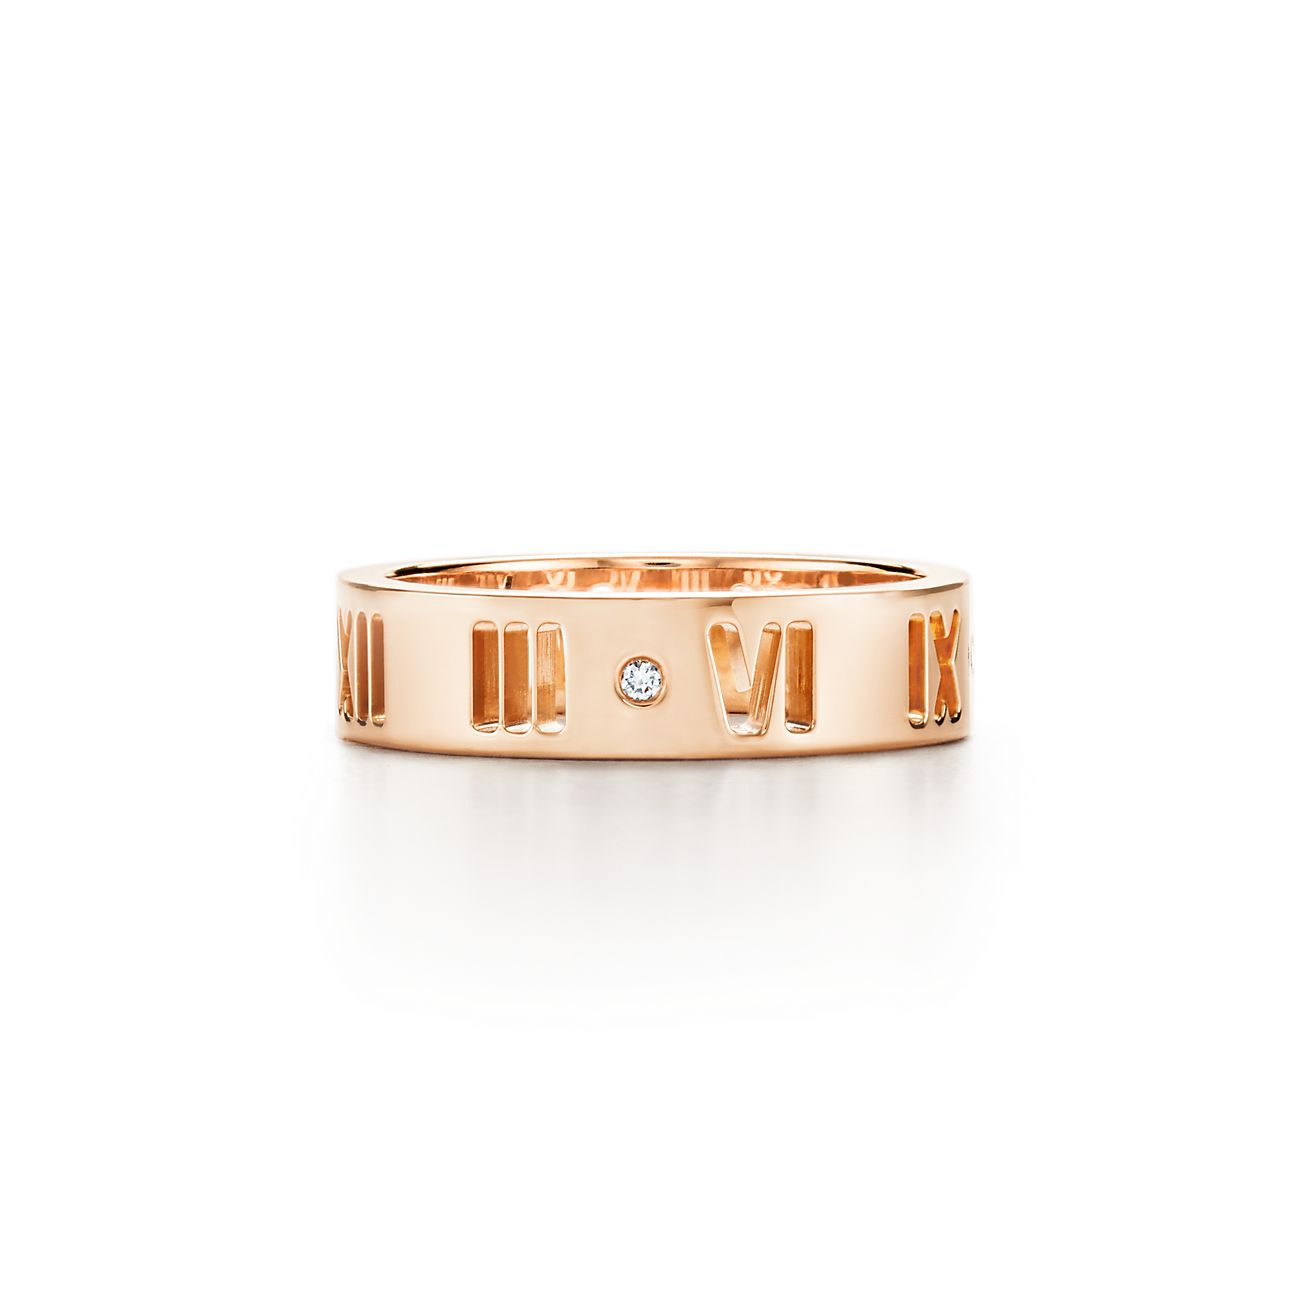 Atlas® pierced ring in 18k rose gold 